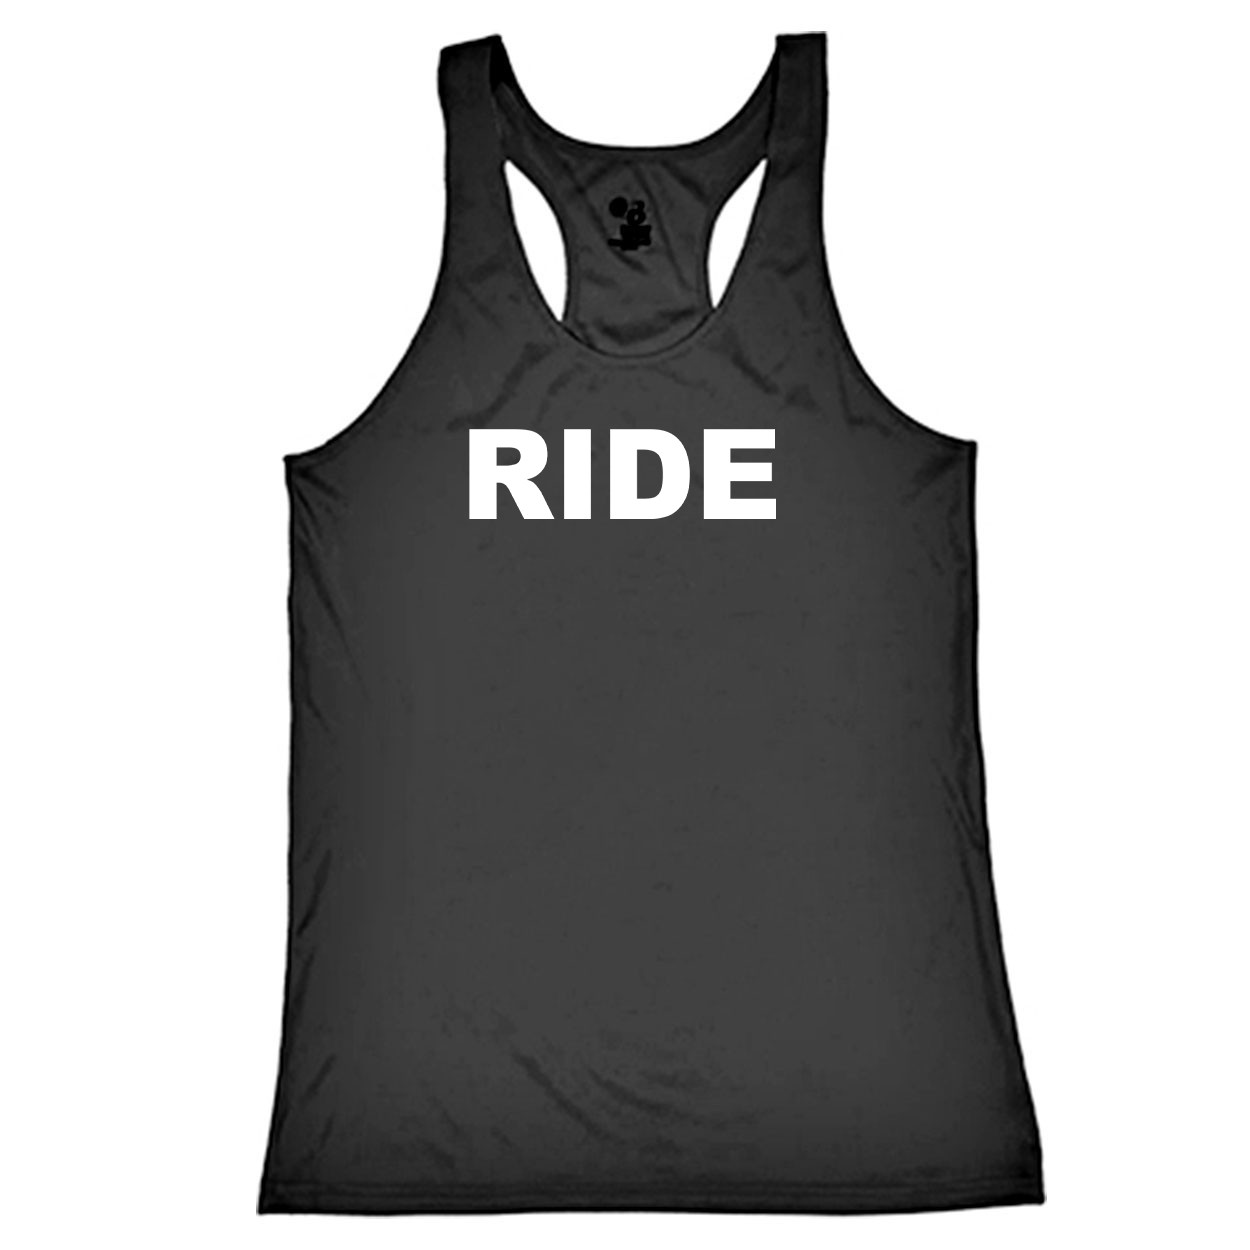 Ride Brand Logo Classic Youth Girls Performance Racerback Tank Top Black (White Logo)